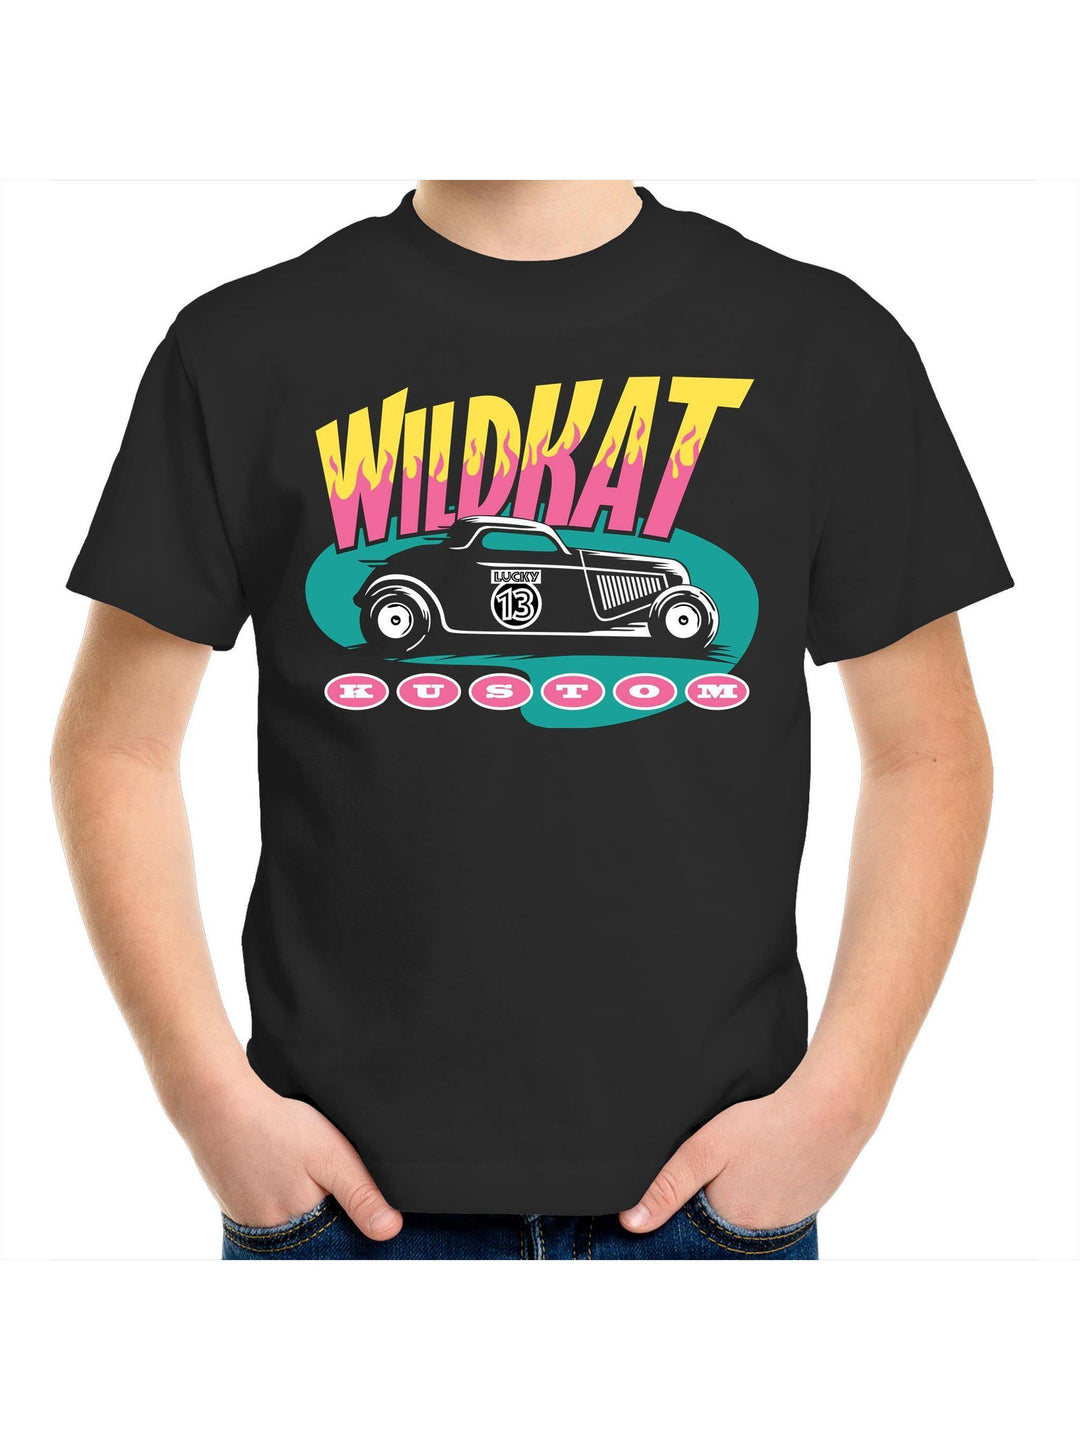 WILDKAT Kids Youth Crew T-Shirt